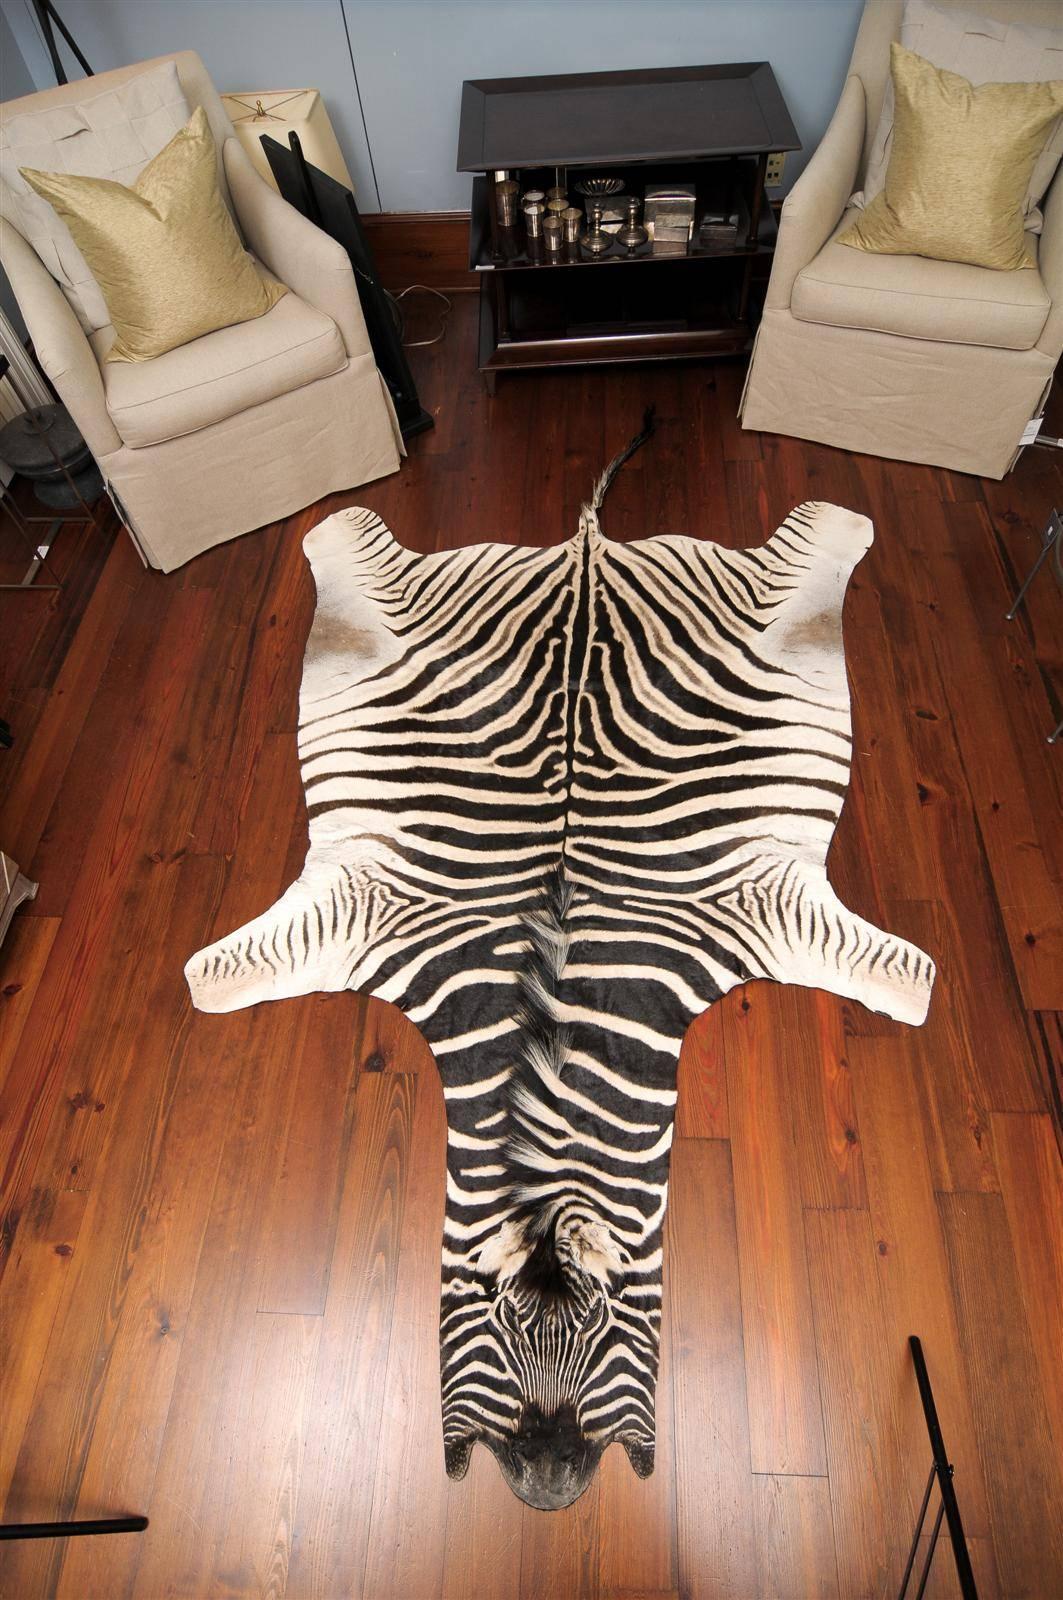 Authentic Zebra skin rug.